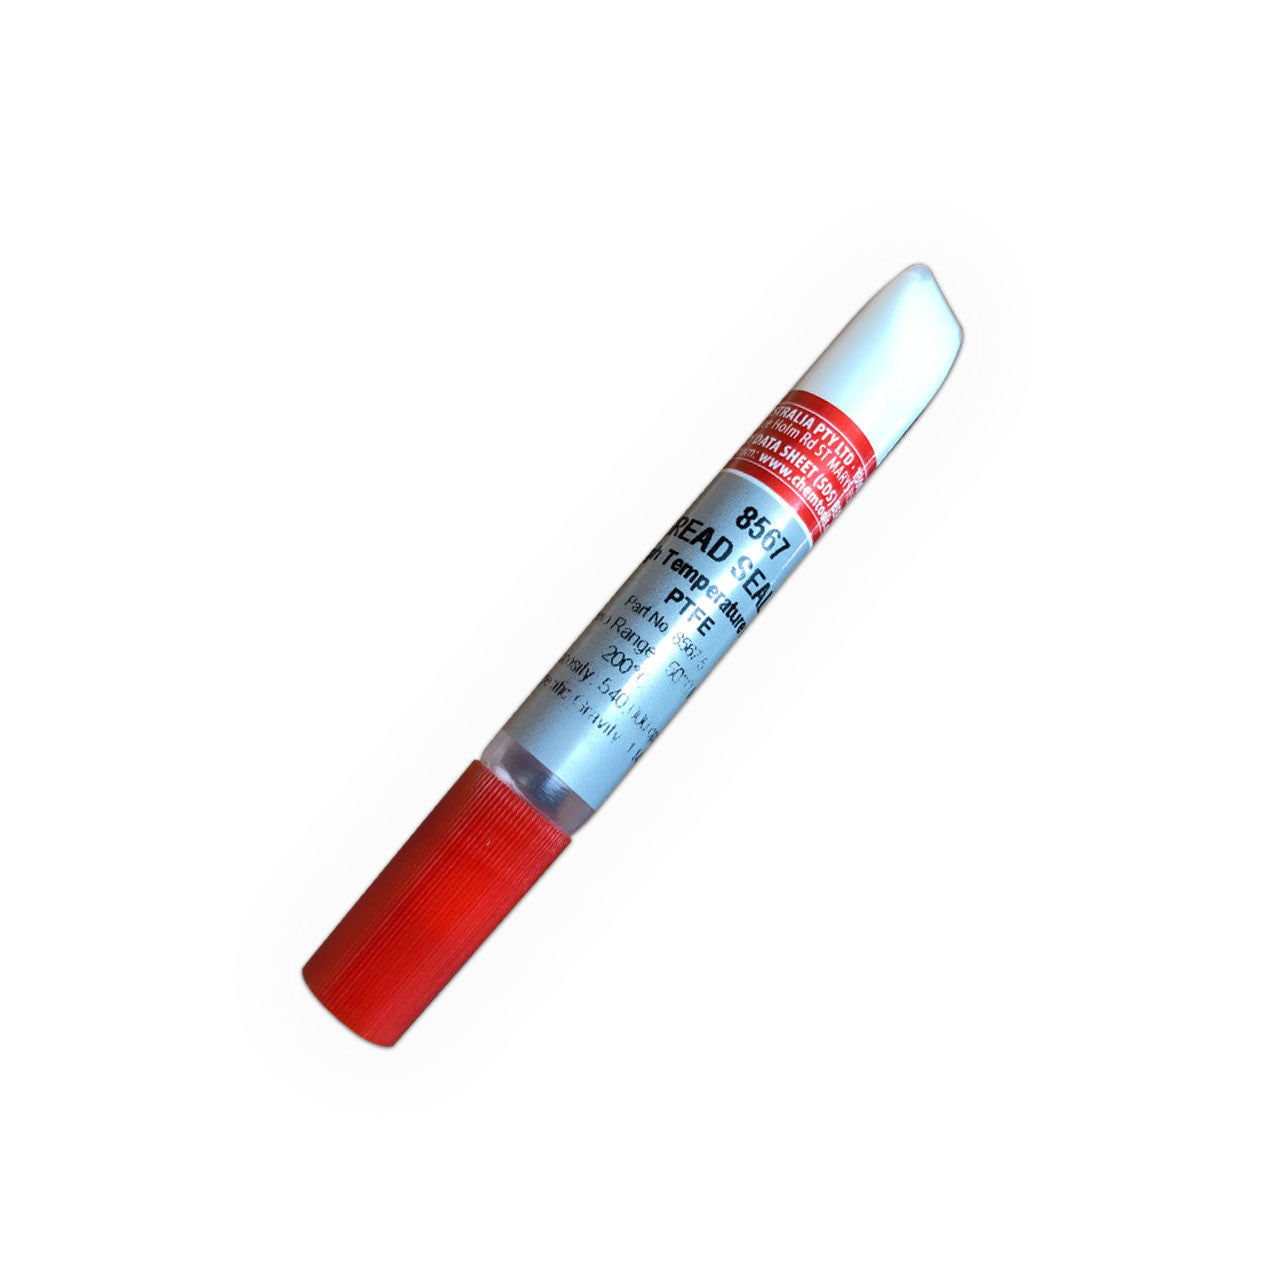 Chemtools Rapidstick 8567-05 Thread Sealant 5ml Tube (High Lubrication, Coarse Fittings)